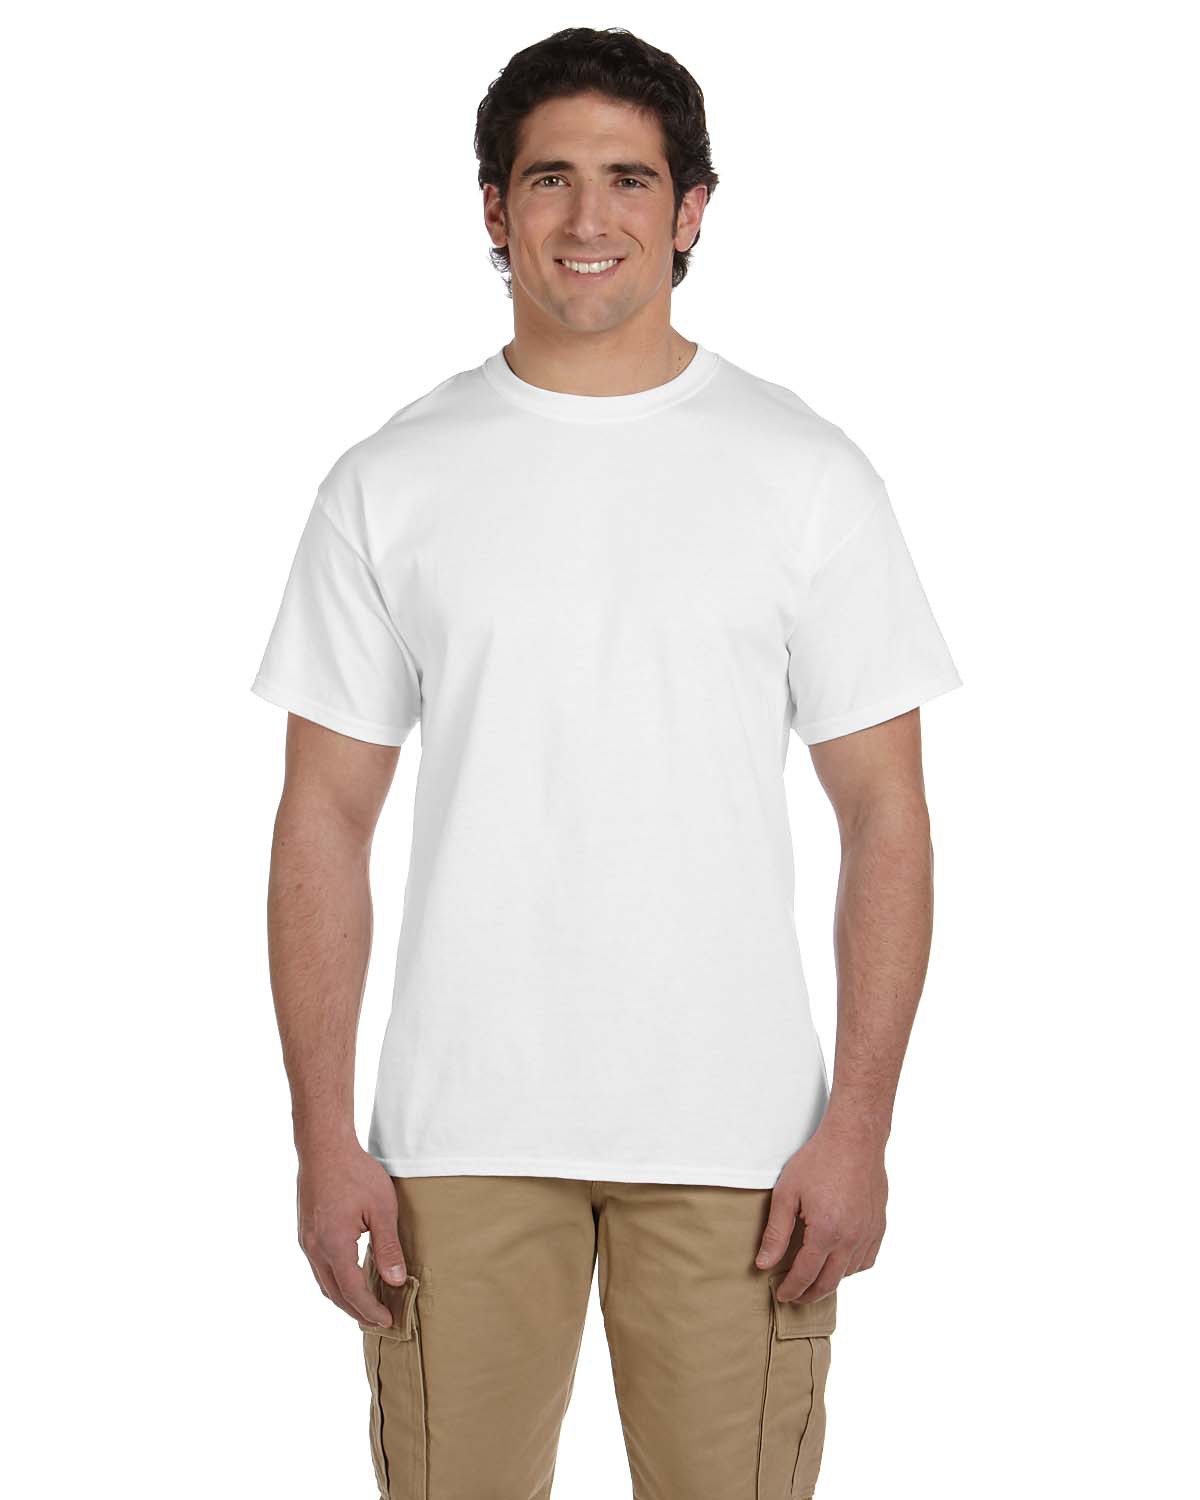 Style # G200 - Original Label 5XL - White Gildan Adult Ultra Cotton 6 Oz T-Shirt 